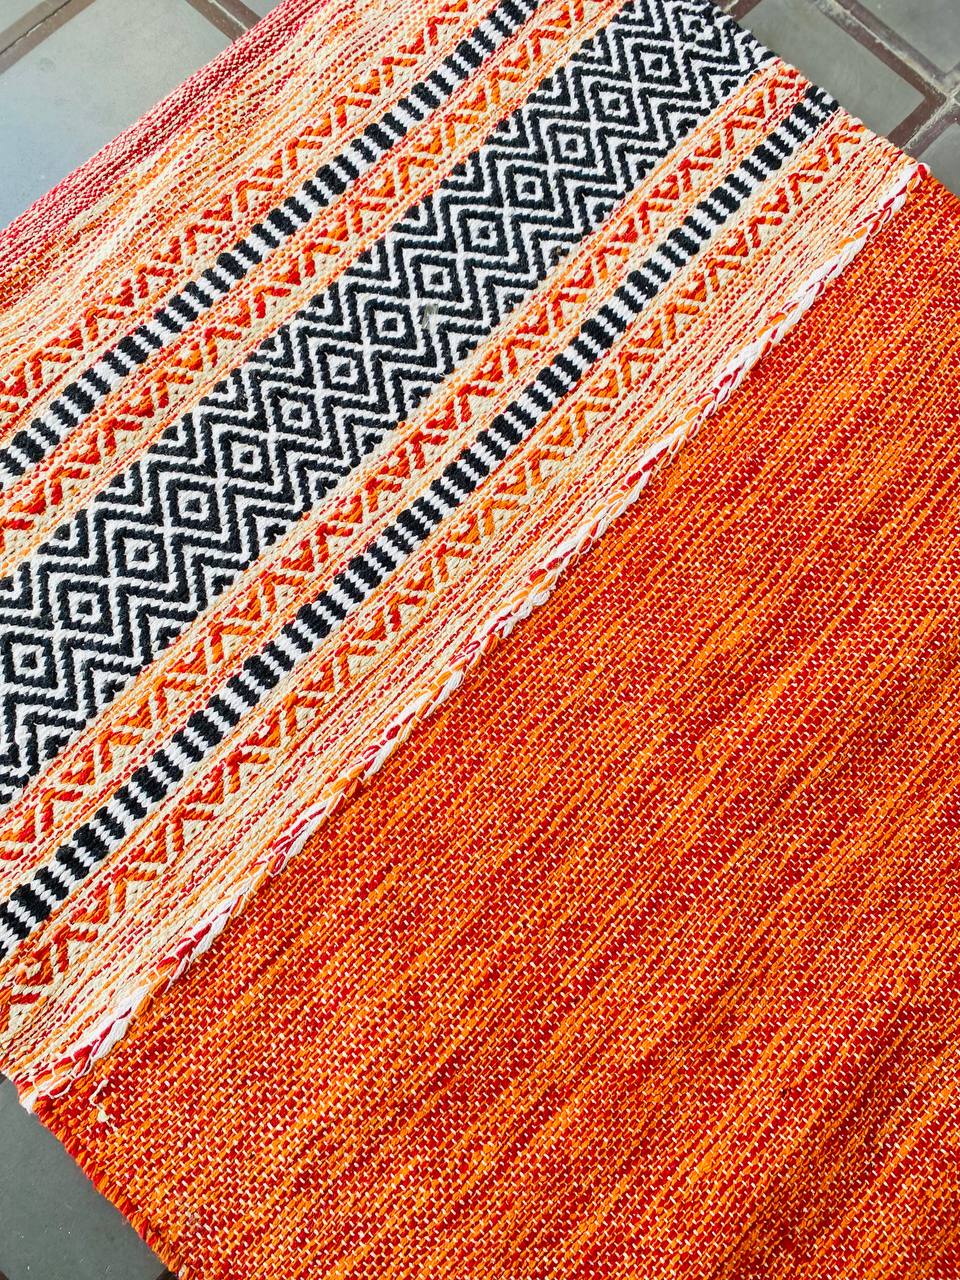 Tapete Kilim "Arte Textil" - Bordado a Mano (120cm x 75cm)